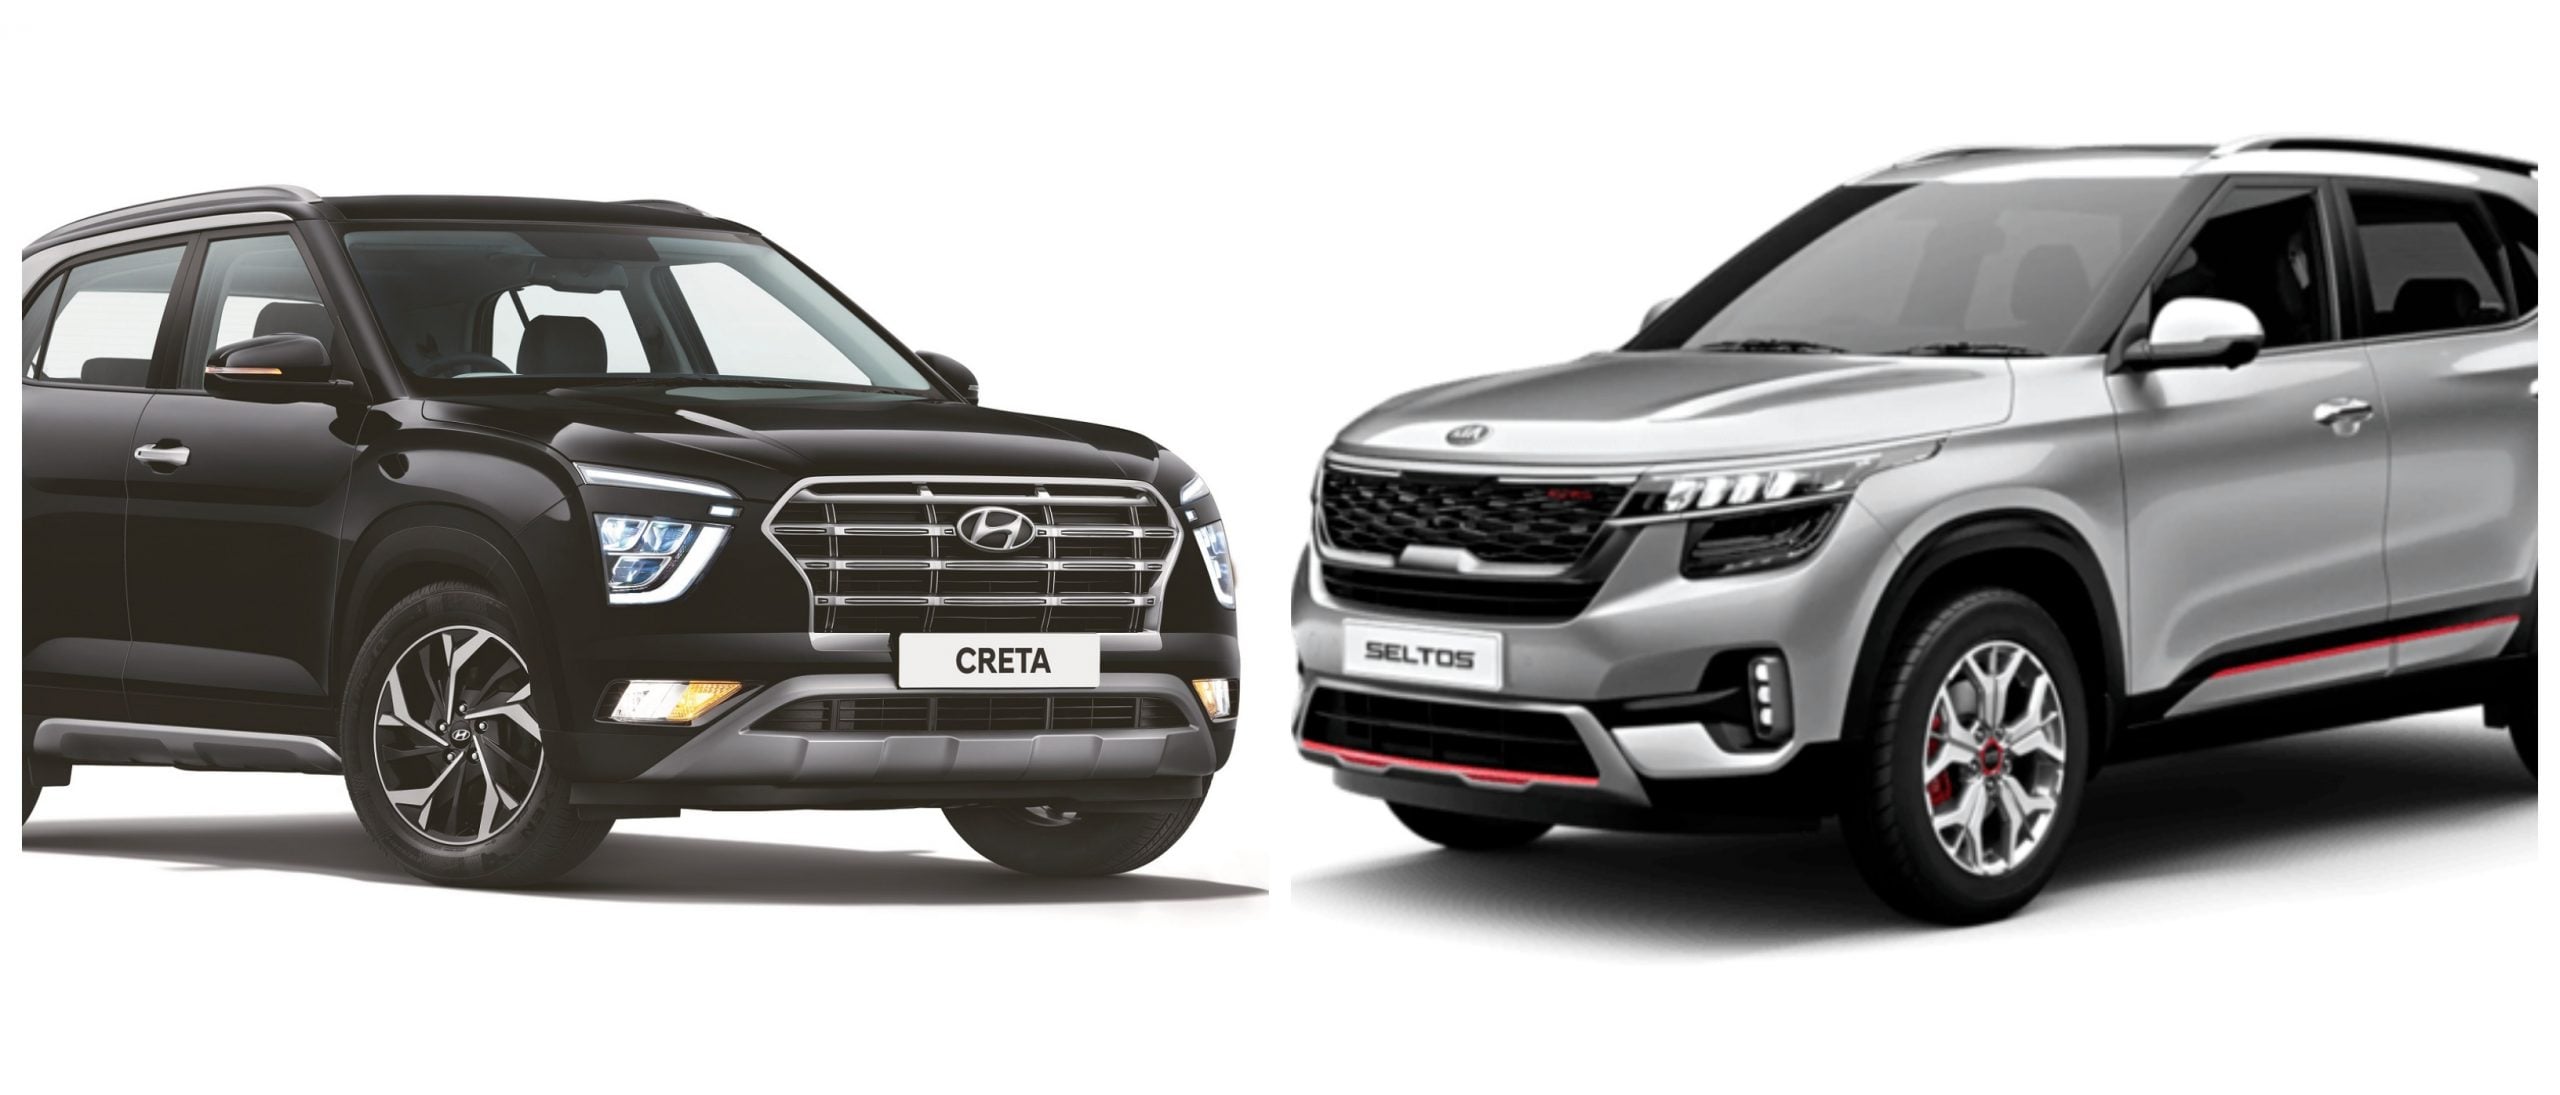 Hyundai Creta Vs Kia Seltos Variant Wise Features Comparison